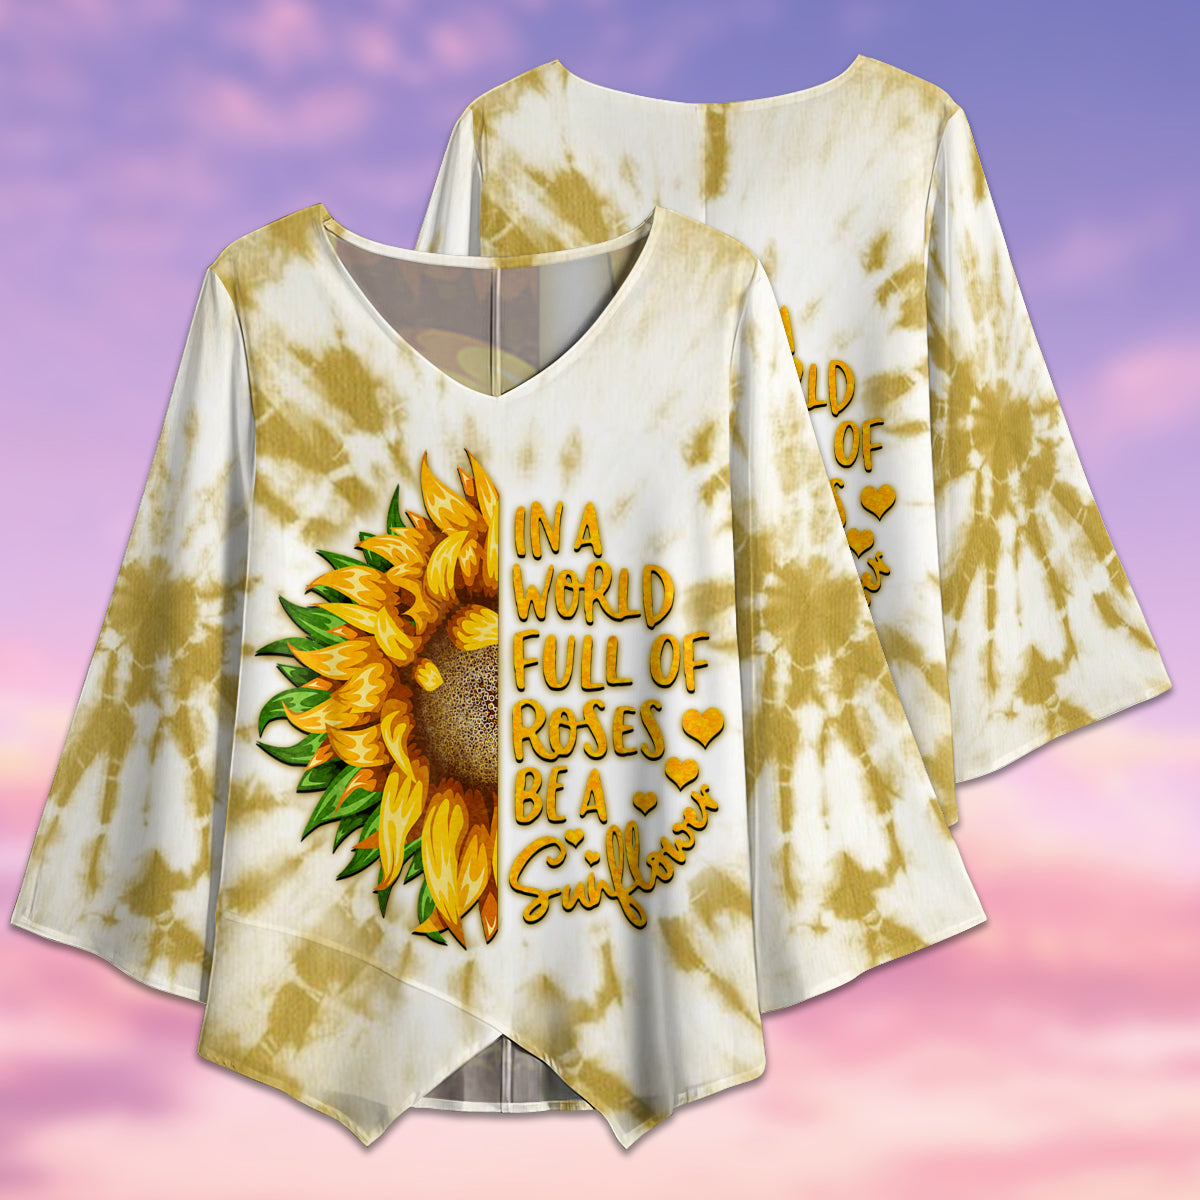 Hippie In A world Full Of Roses Be A Sunflower Tie Dye - V-neck T-shirt - Owls Matrix LTD